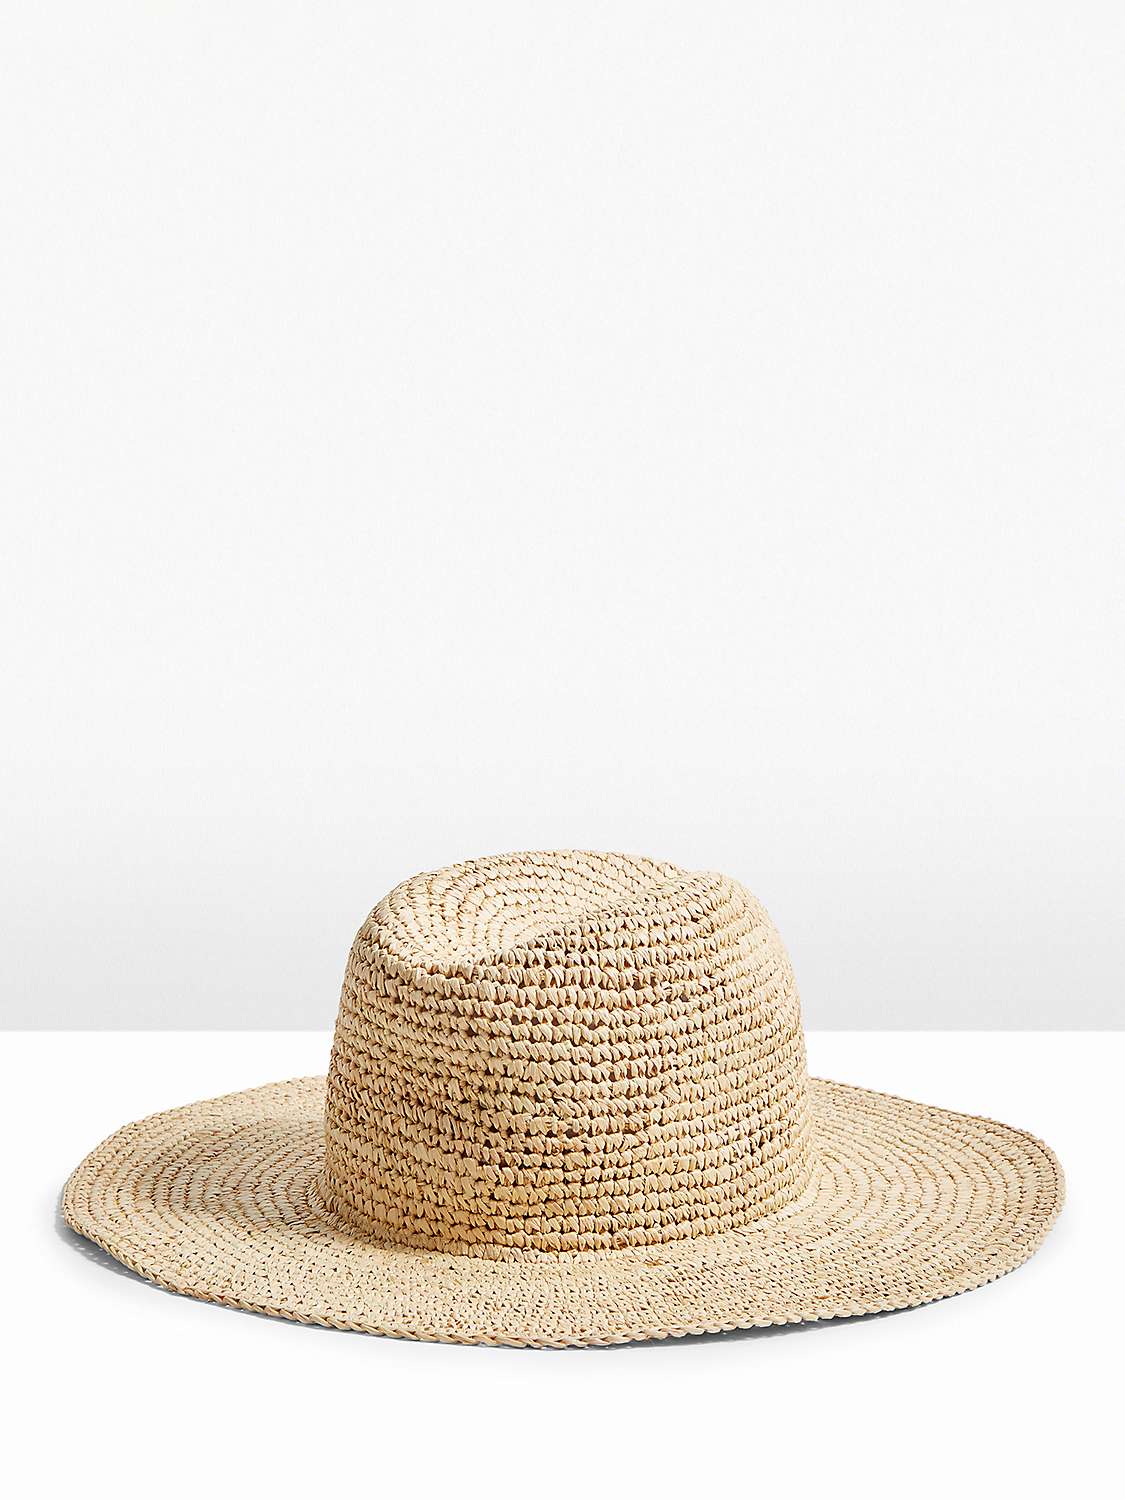 HUSH Sydney Straw Fedora Hat, Natural at John Lewis & Partners